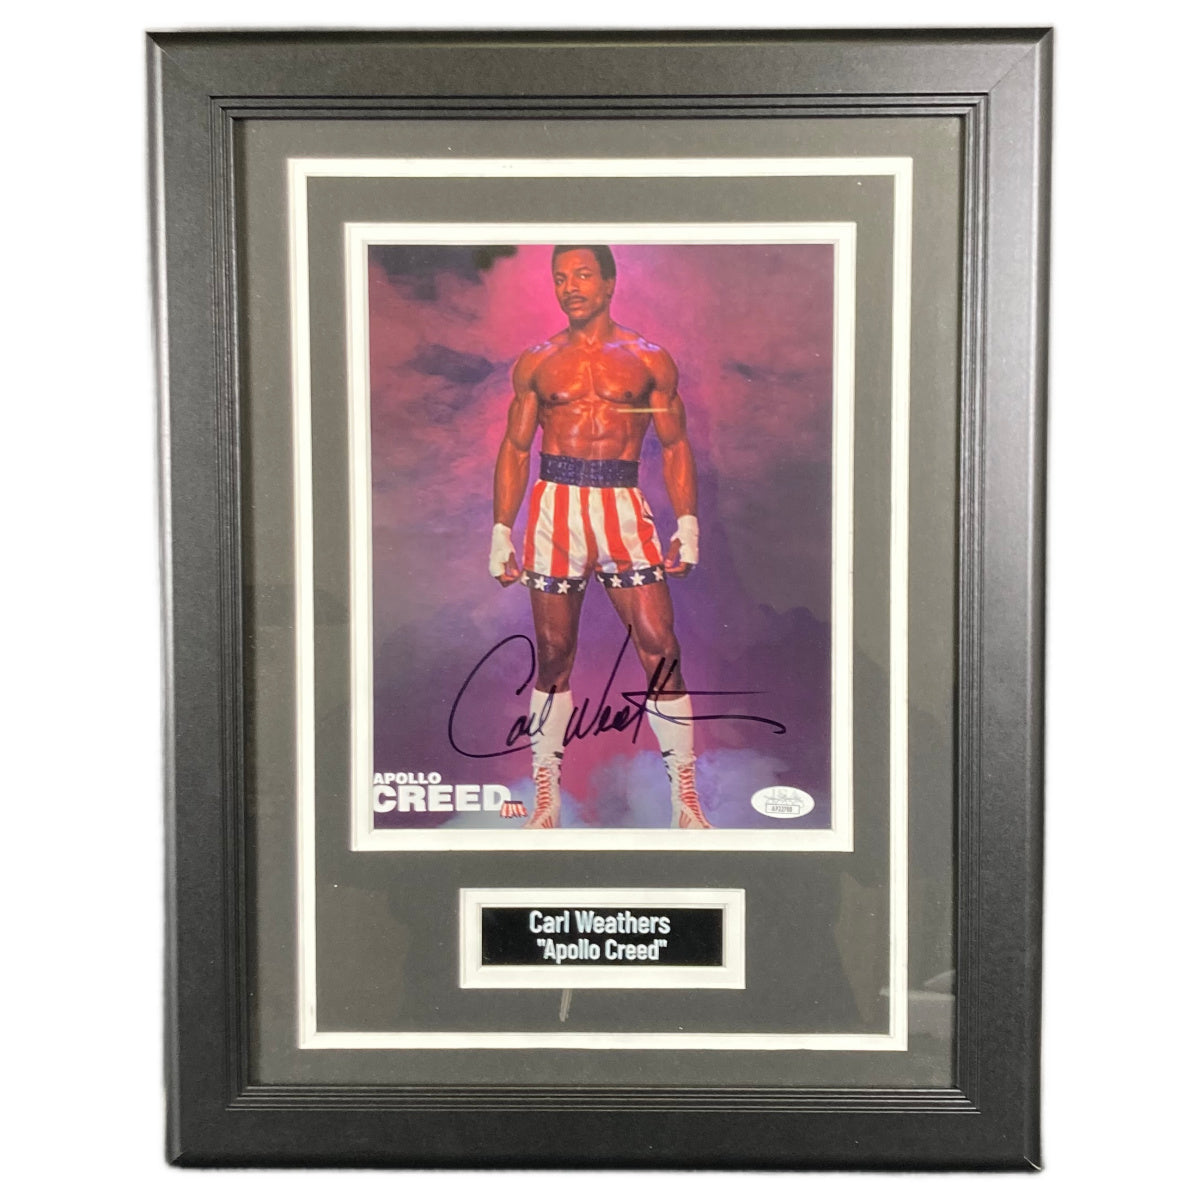 Carl Weathers Signed 8x10 Custom Framed Photo Rocky Apollo Creed Autographed JSA COA